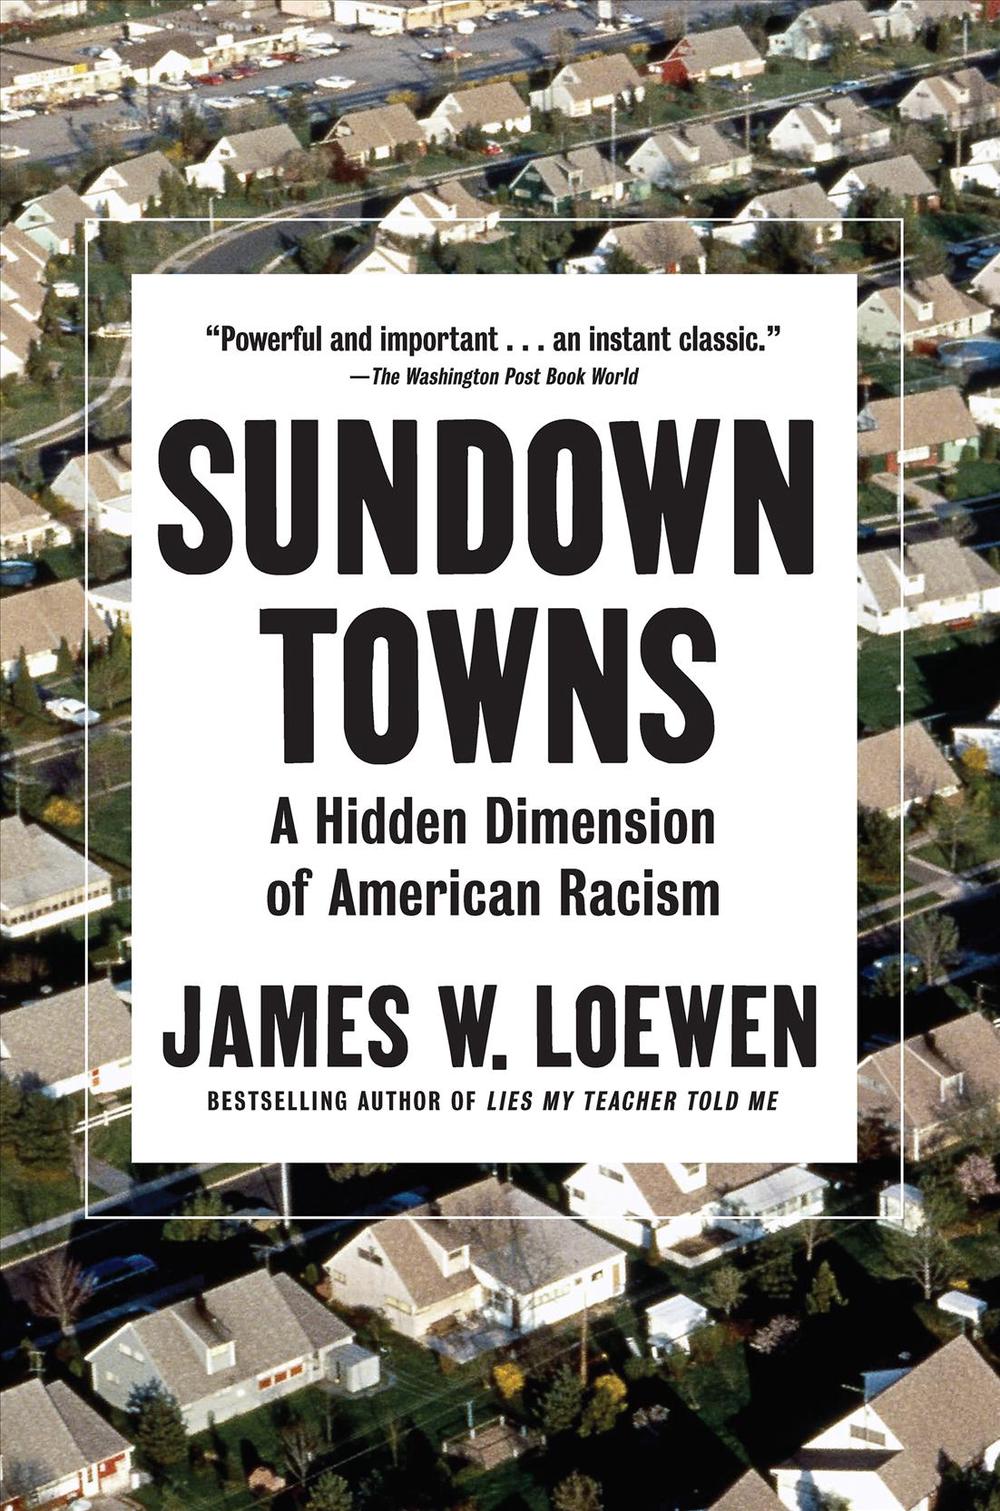 Sundown Towns by James W. Loewen Hardcover Book Free Shipping! eBay